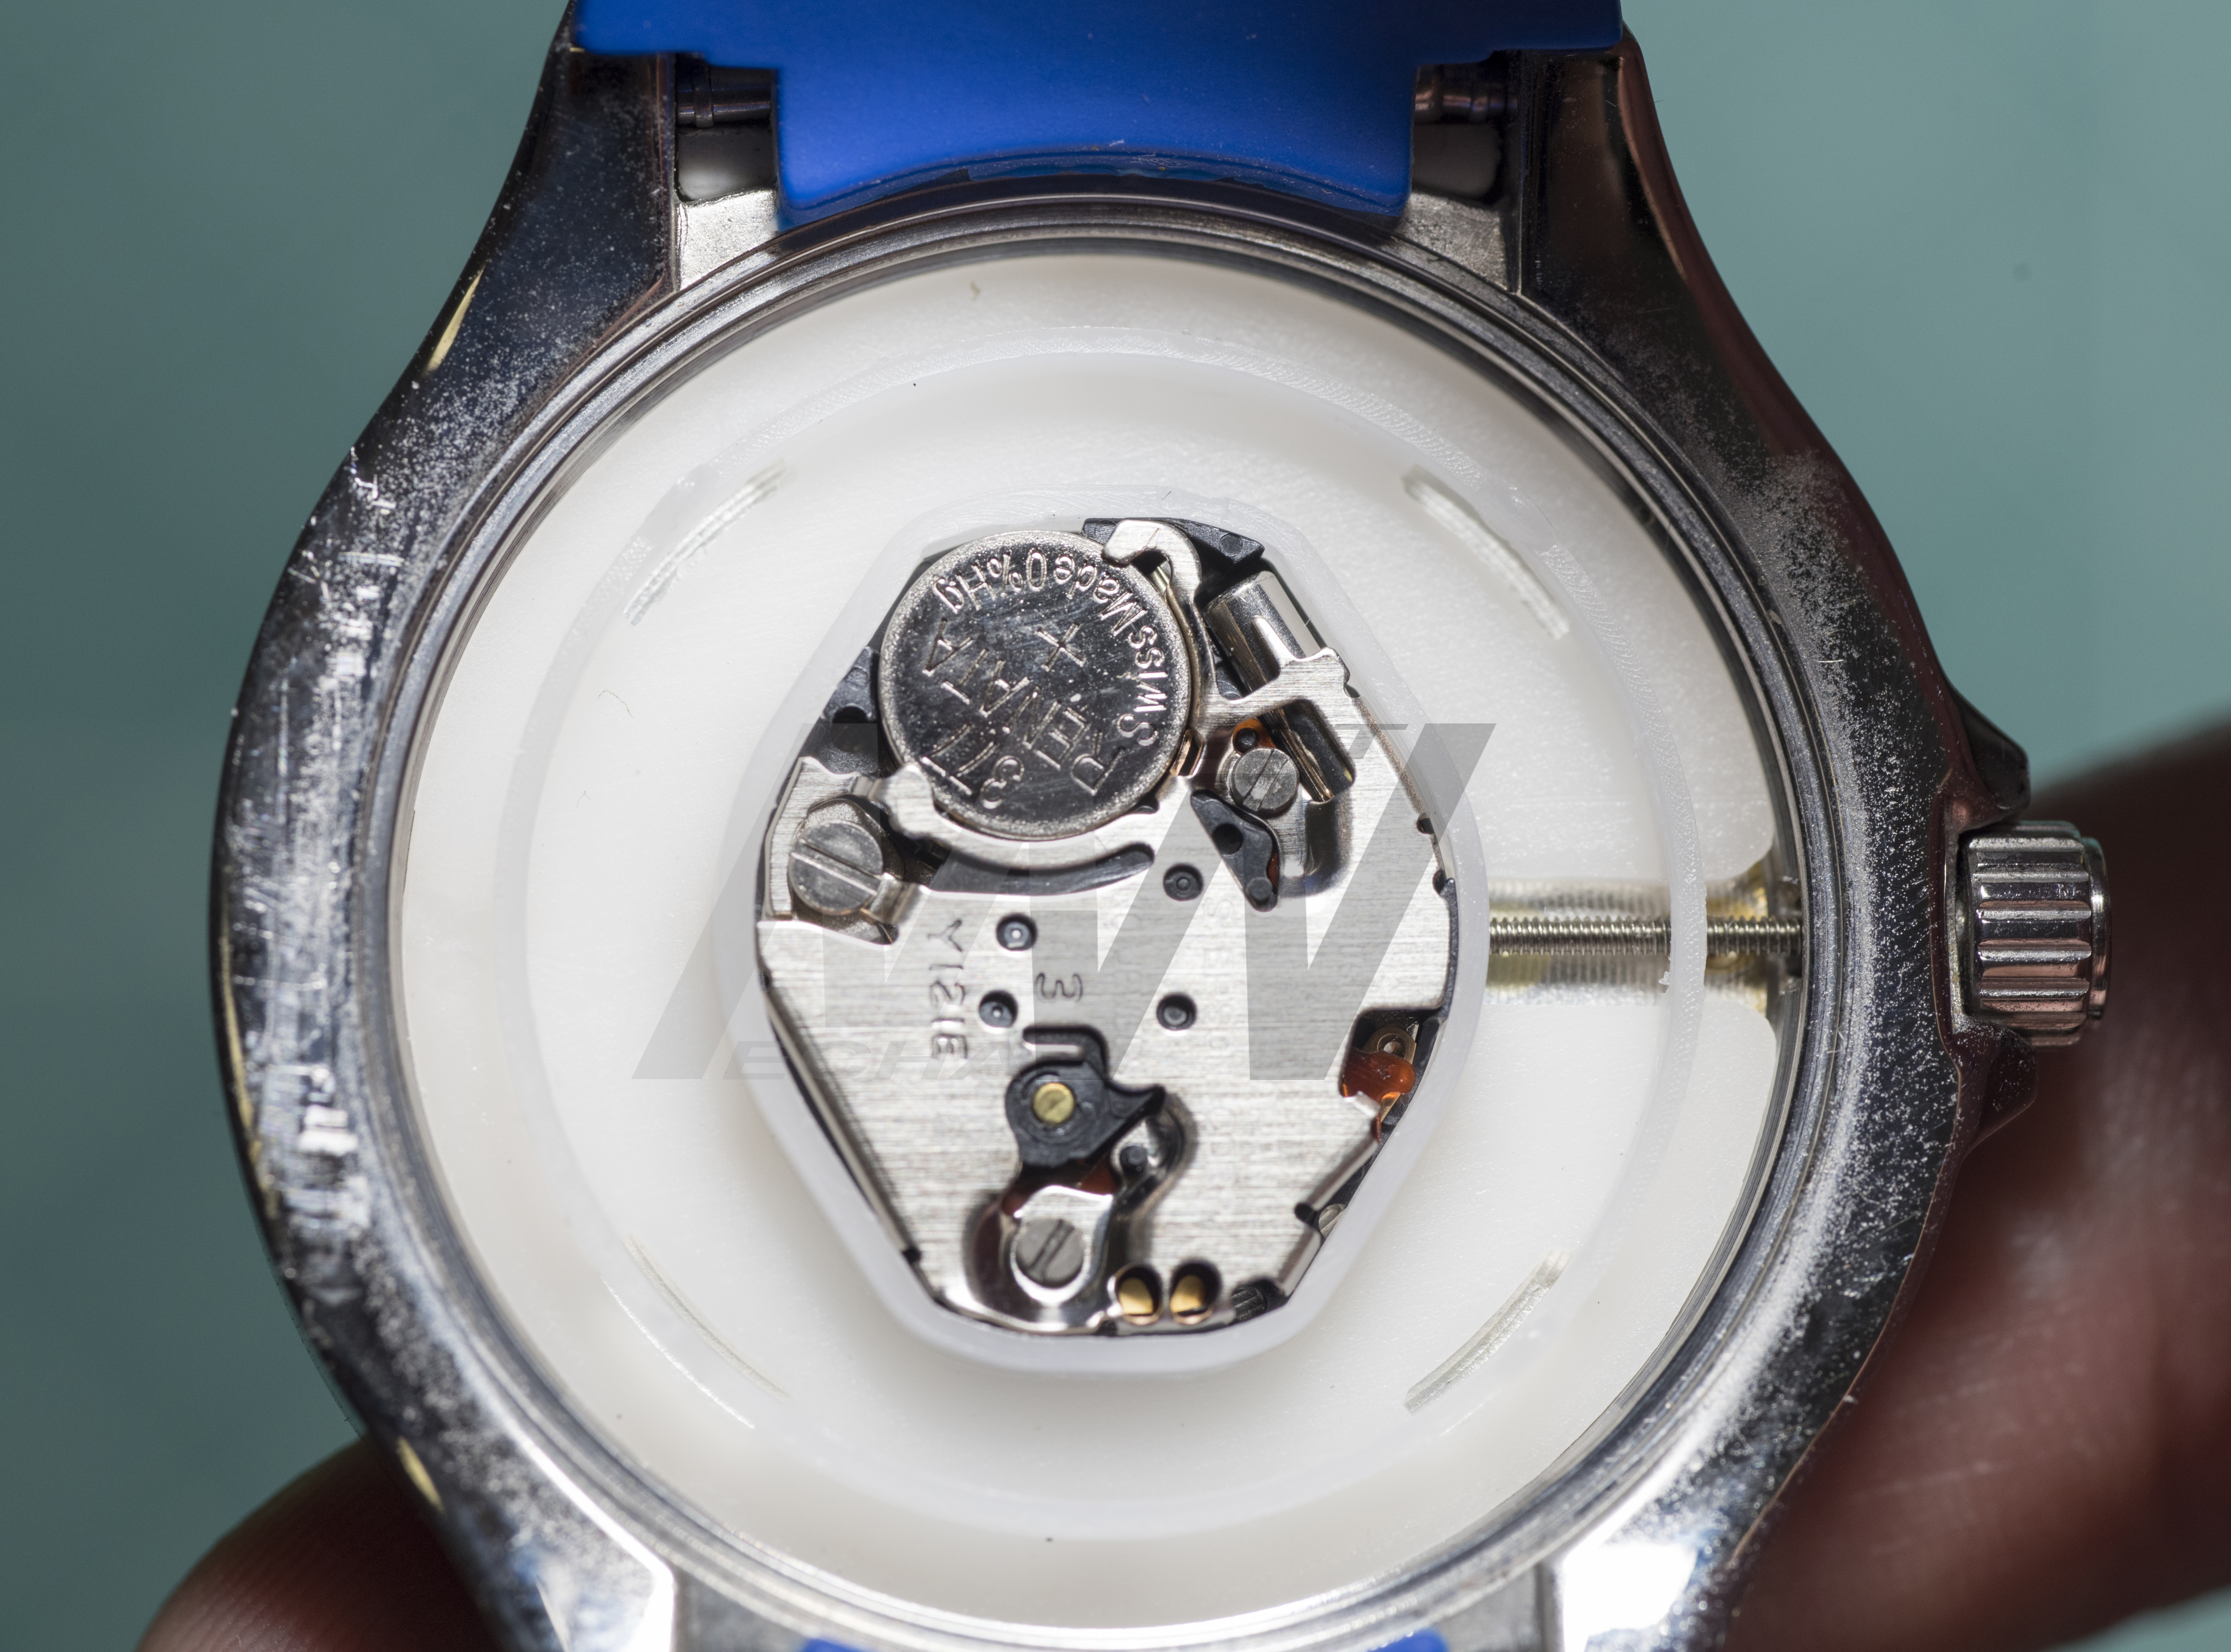 How to Replace a Watch Battery | MechaWrist